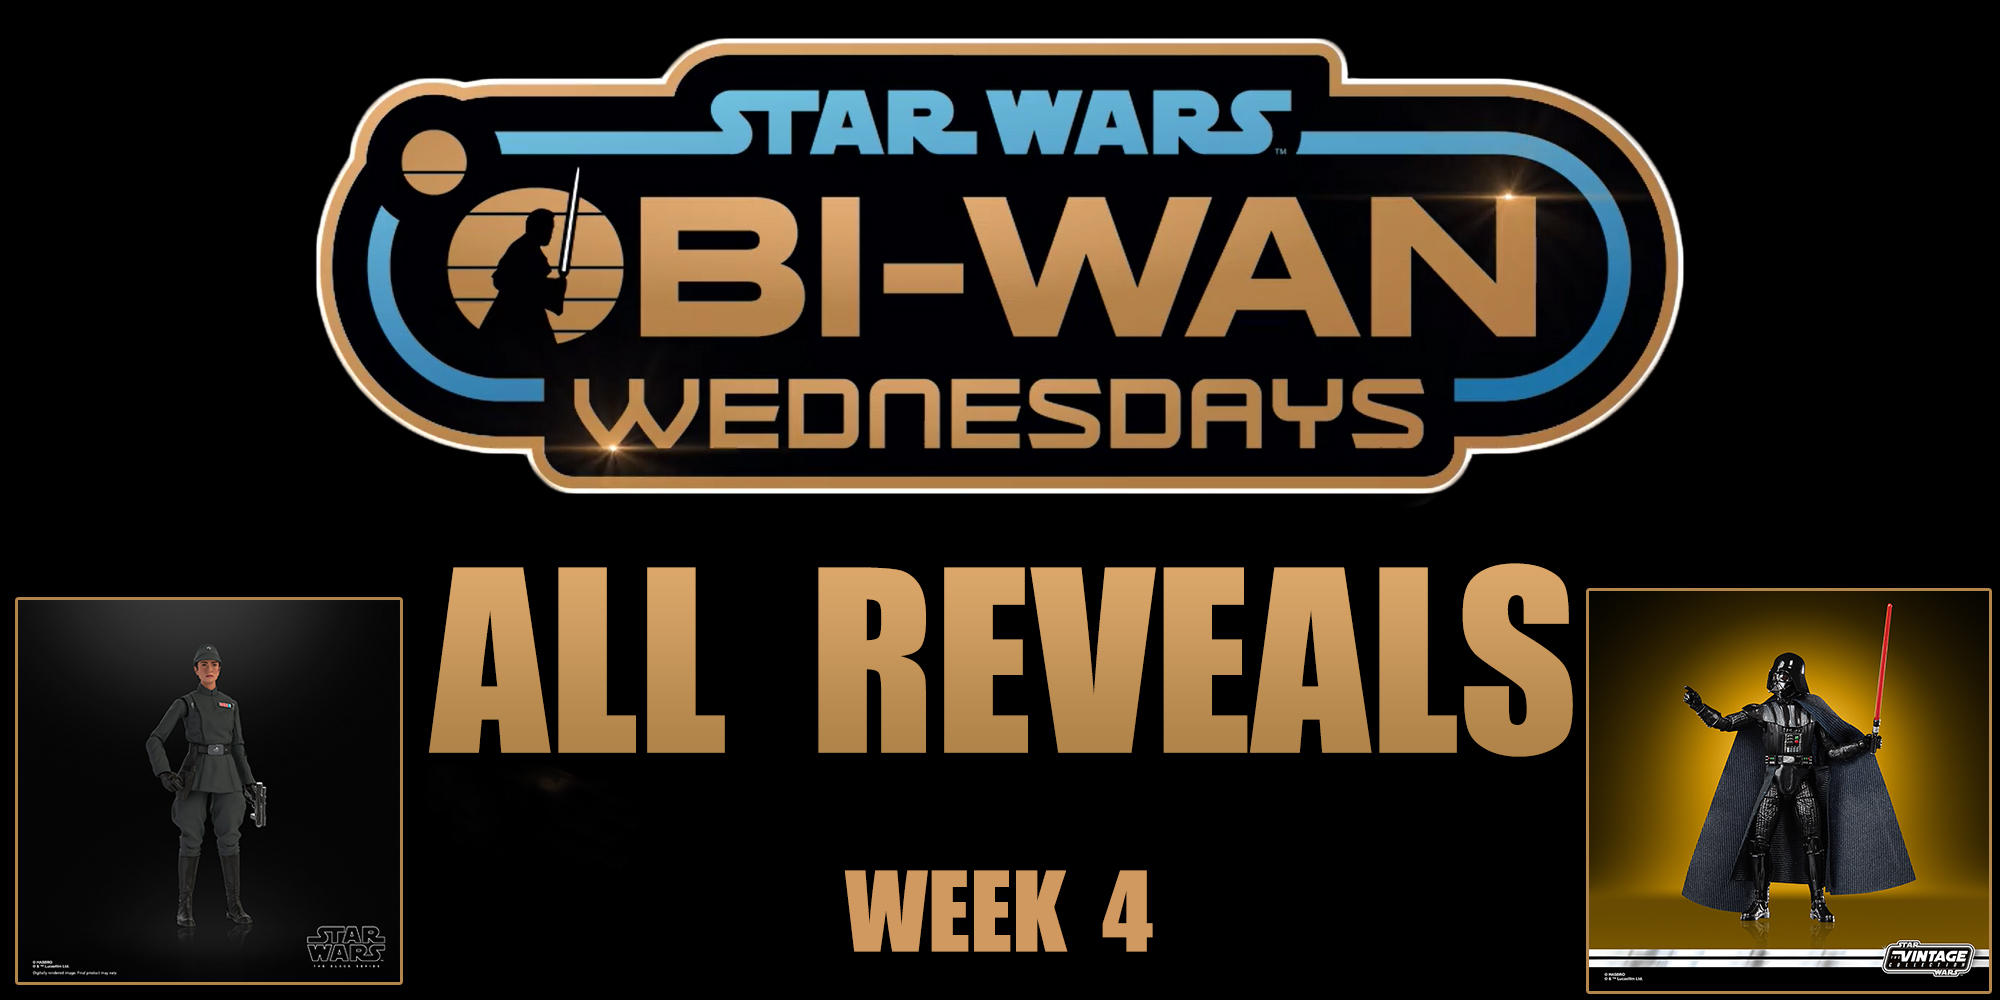 Obi-Wan Wednesdays - Week 4 Summary